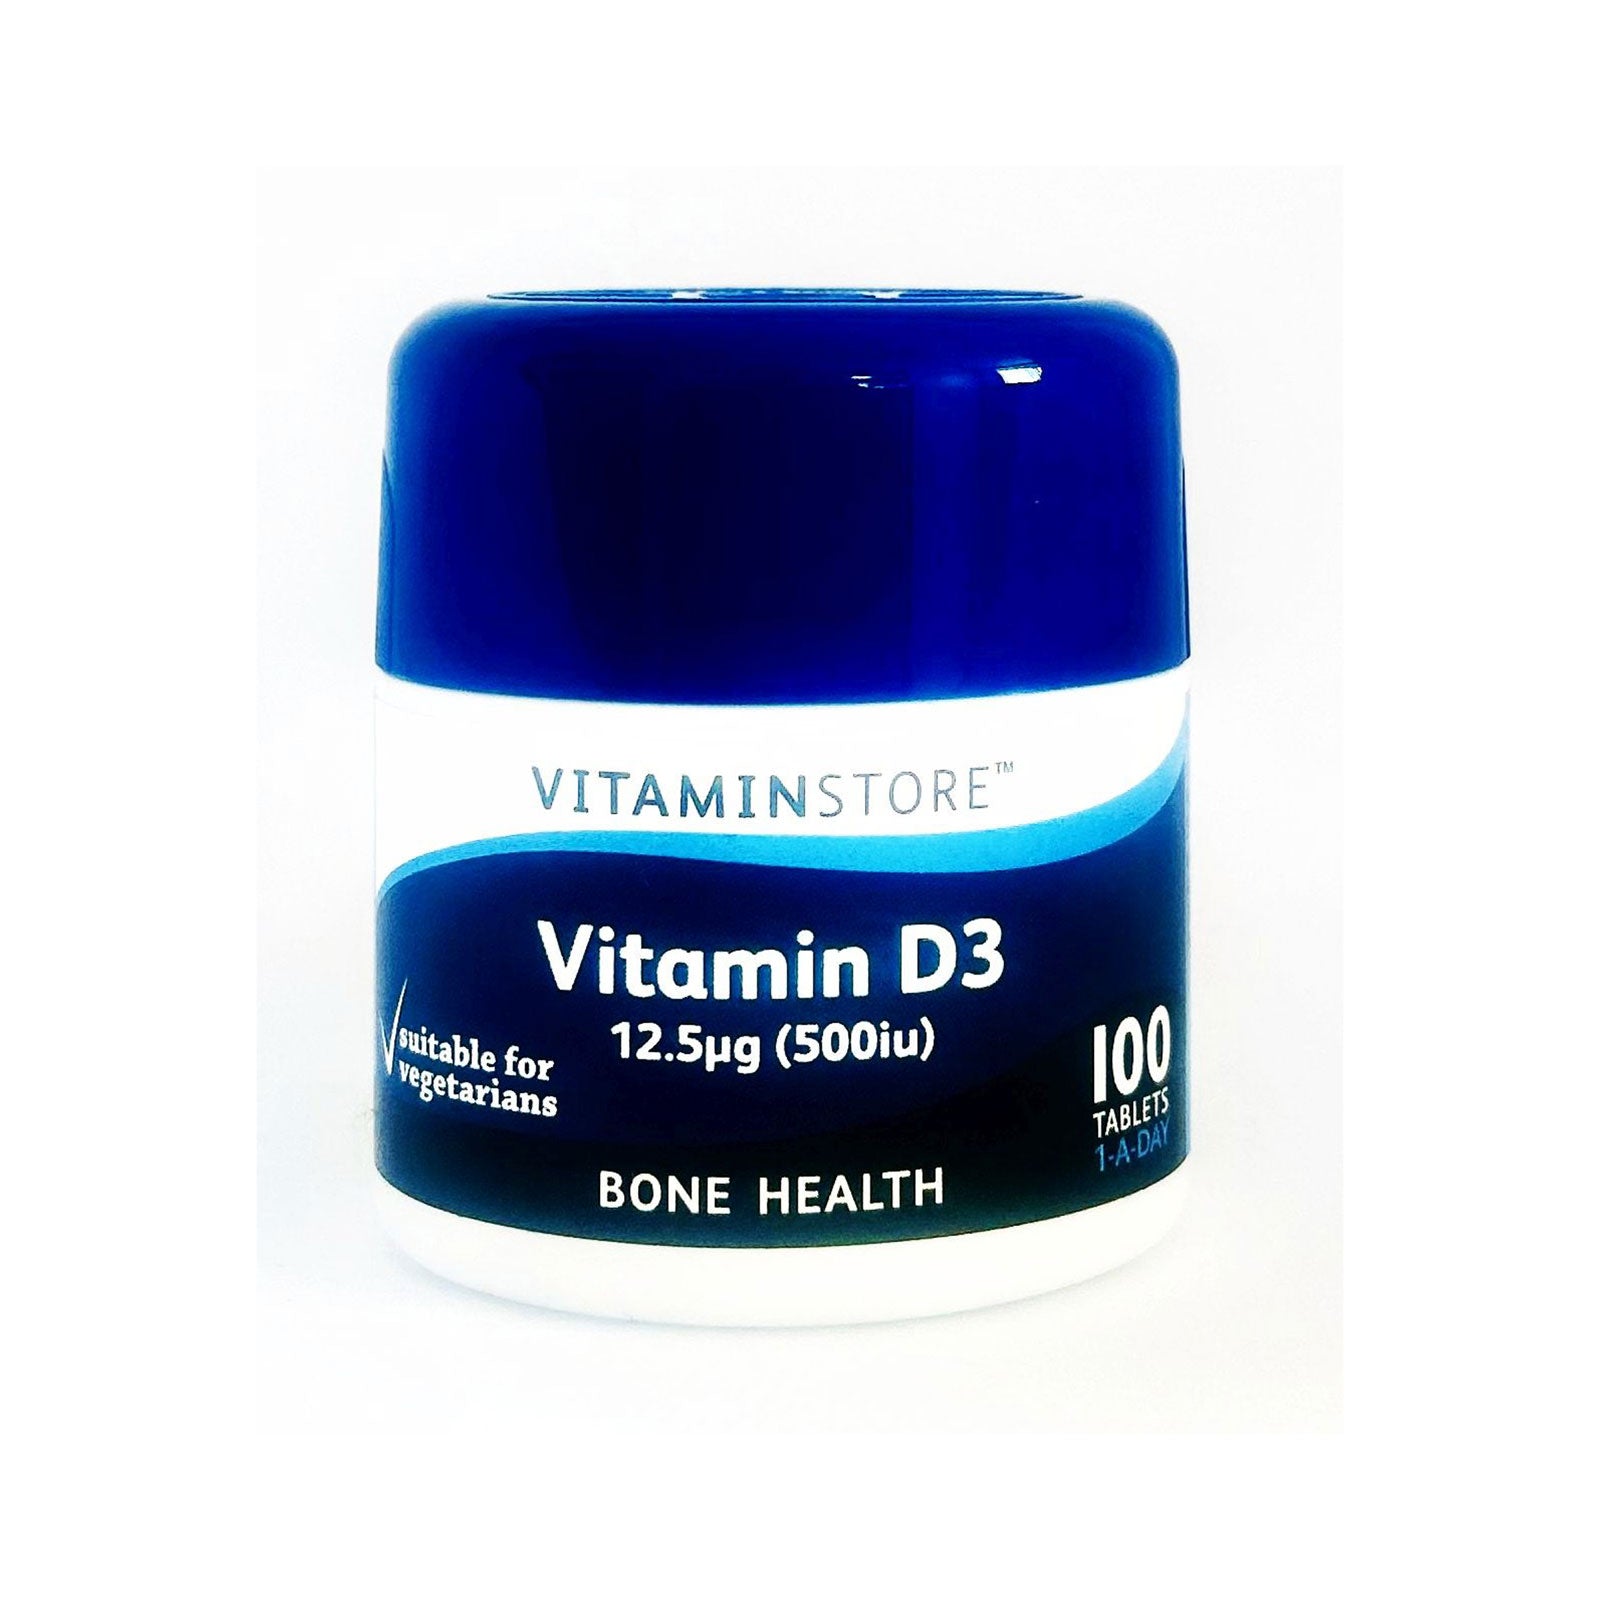 Vitamin Store Vitamin D3 12.5ug(500iu) for Bone Health